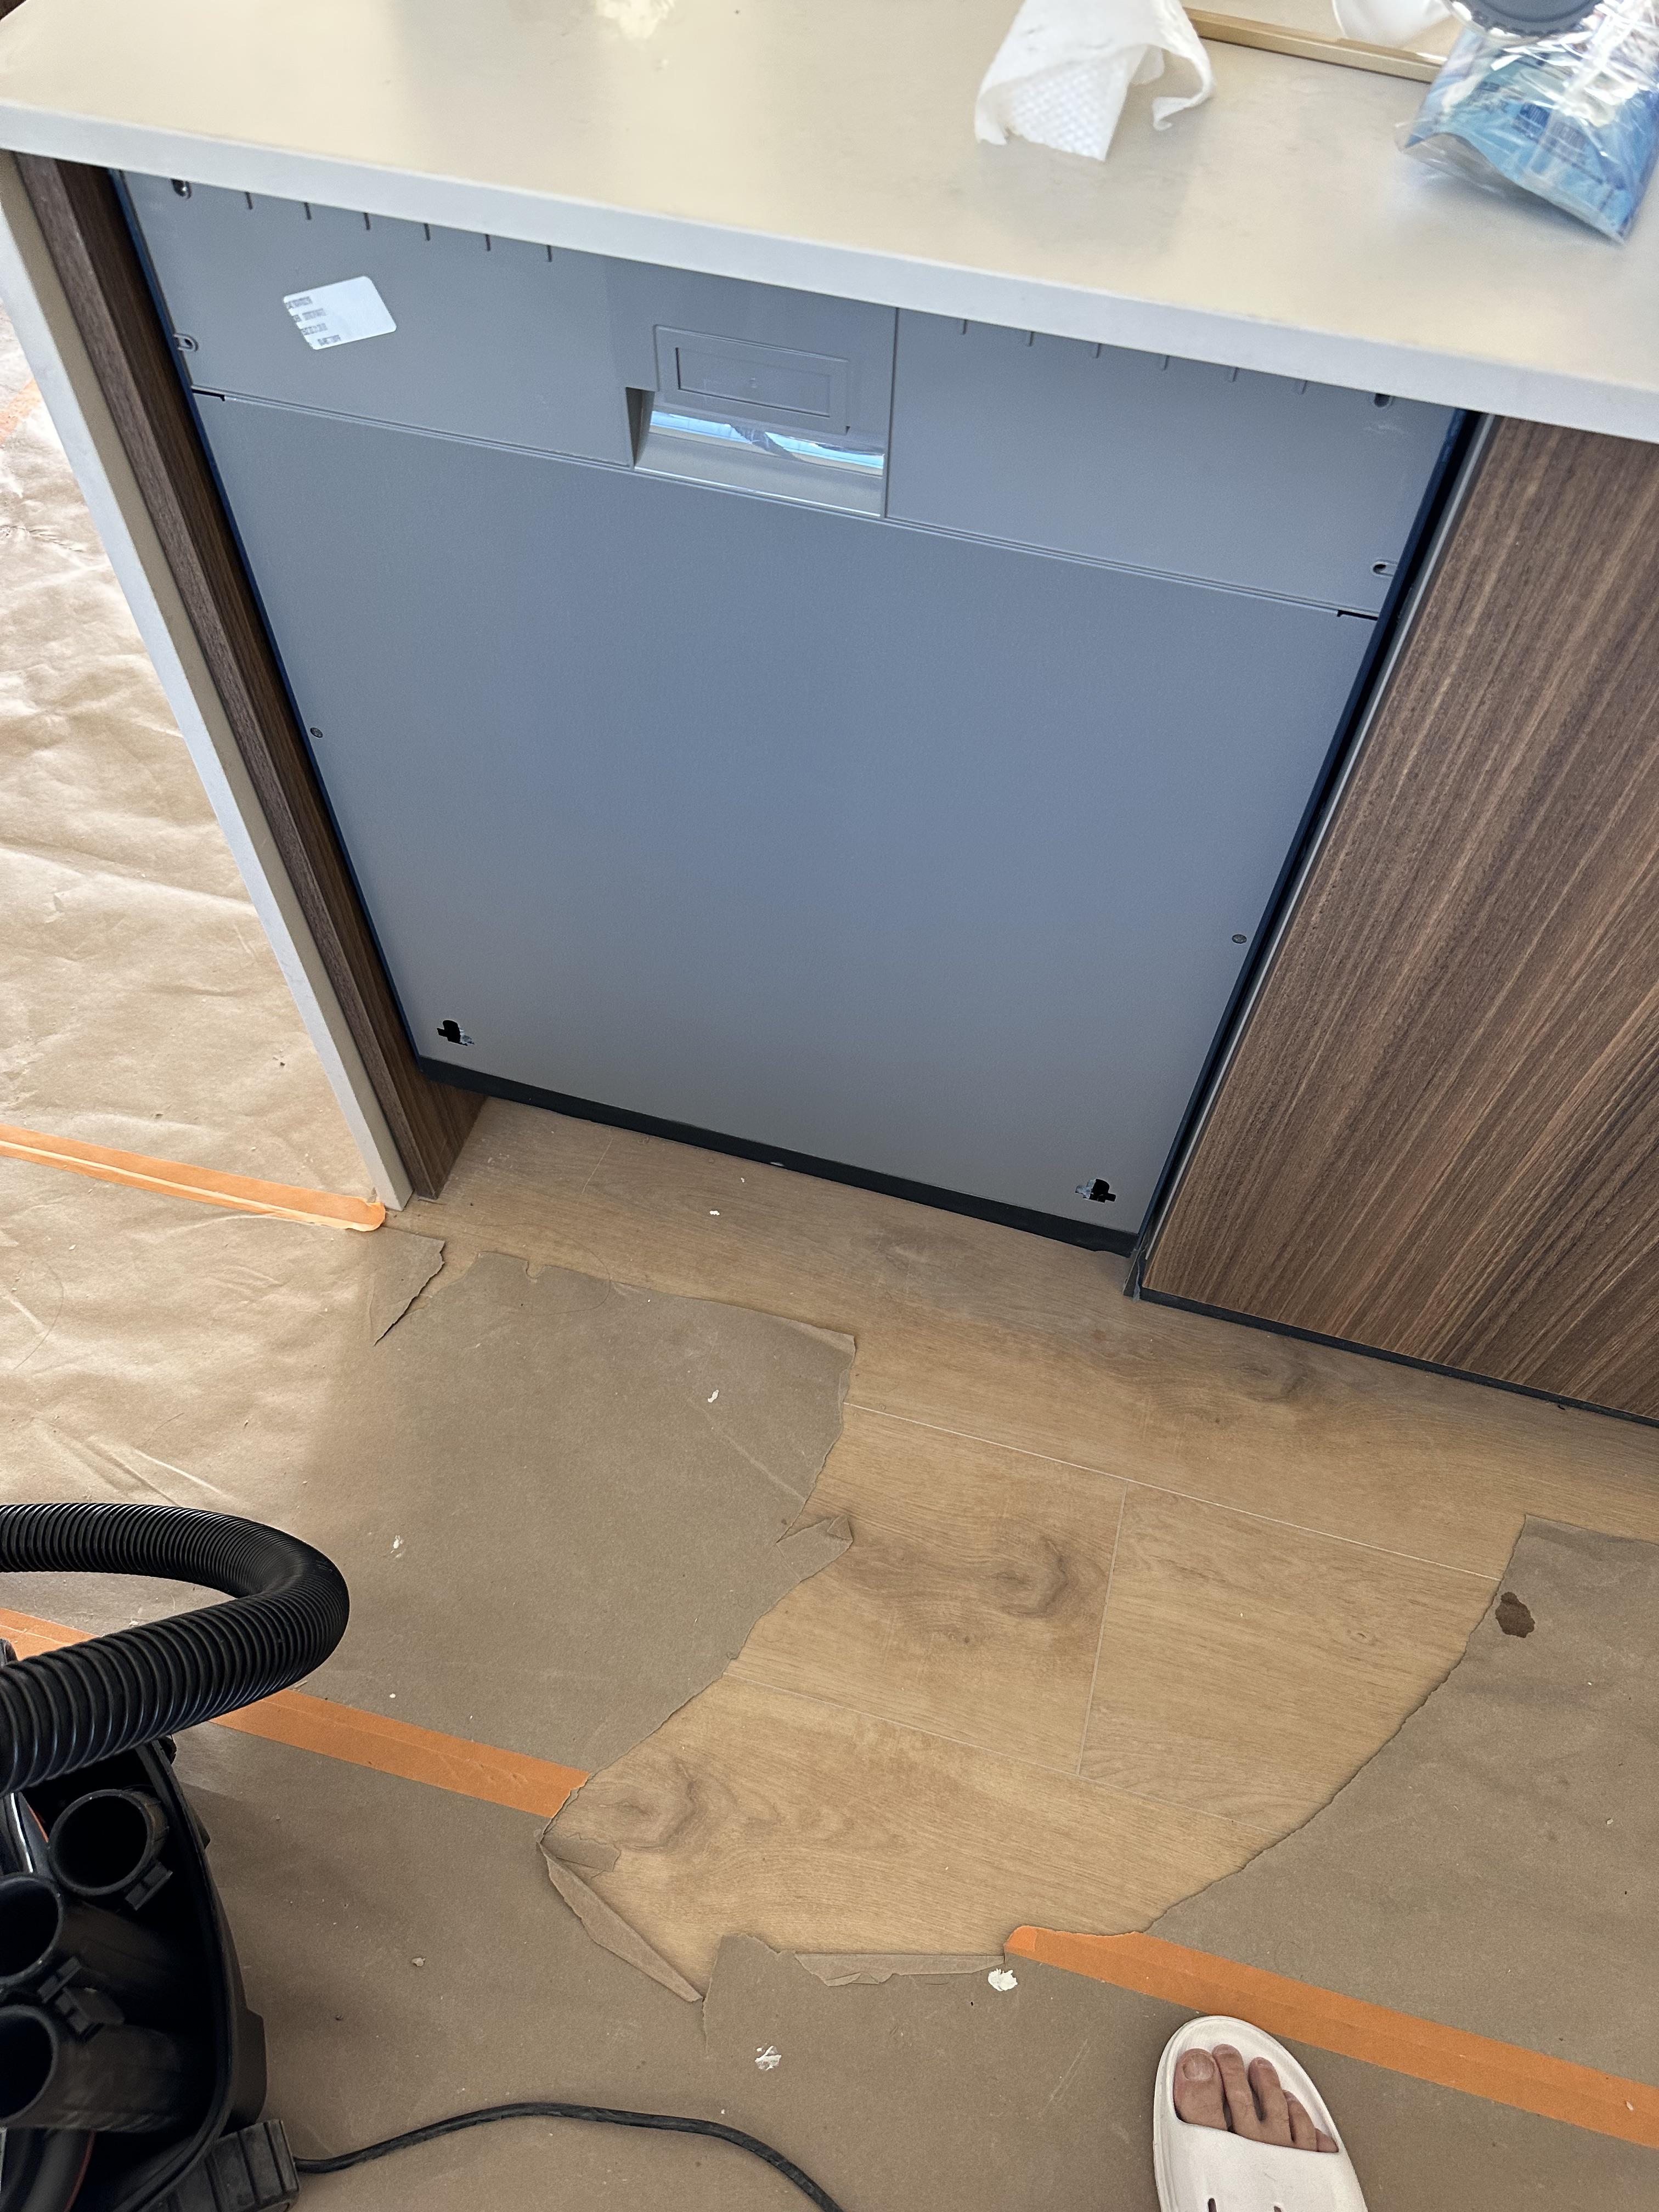 Should my panel ready dishwasher door spring shut?